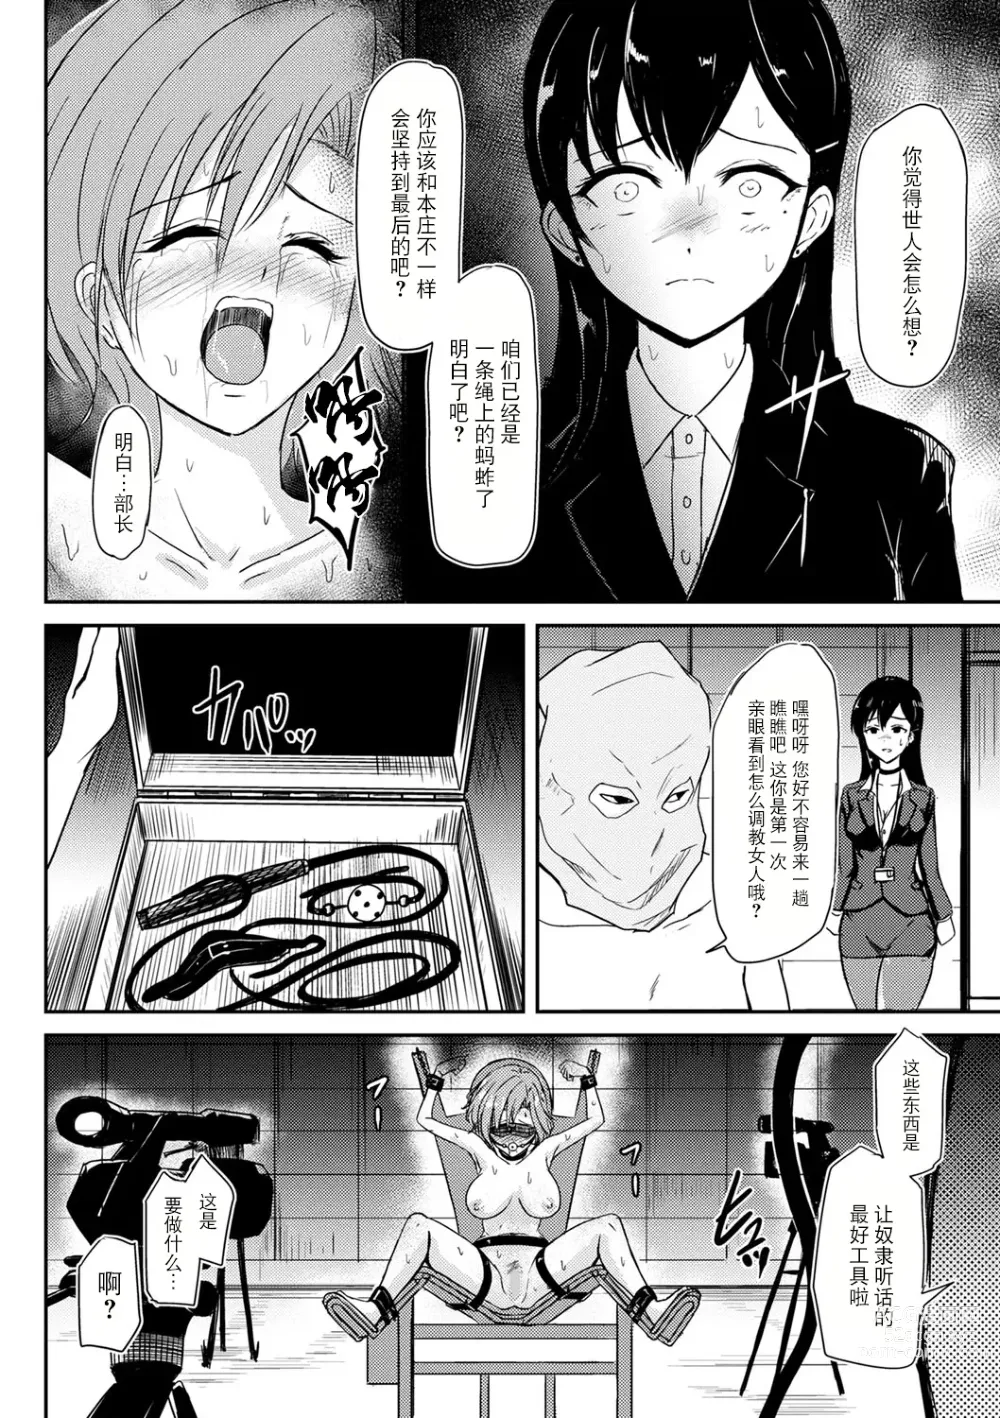 Page 6 of manga Slave Presentation